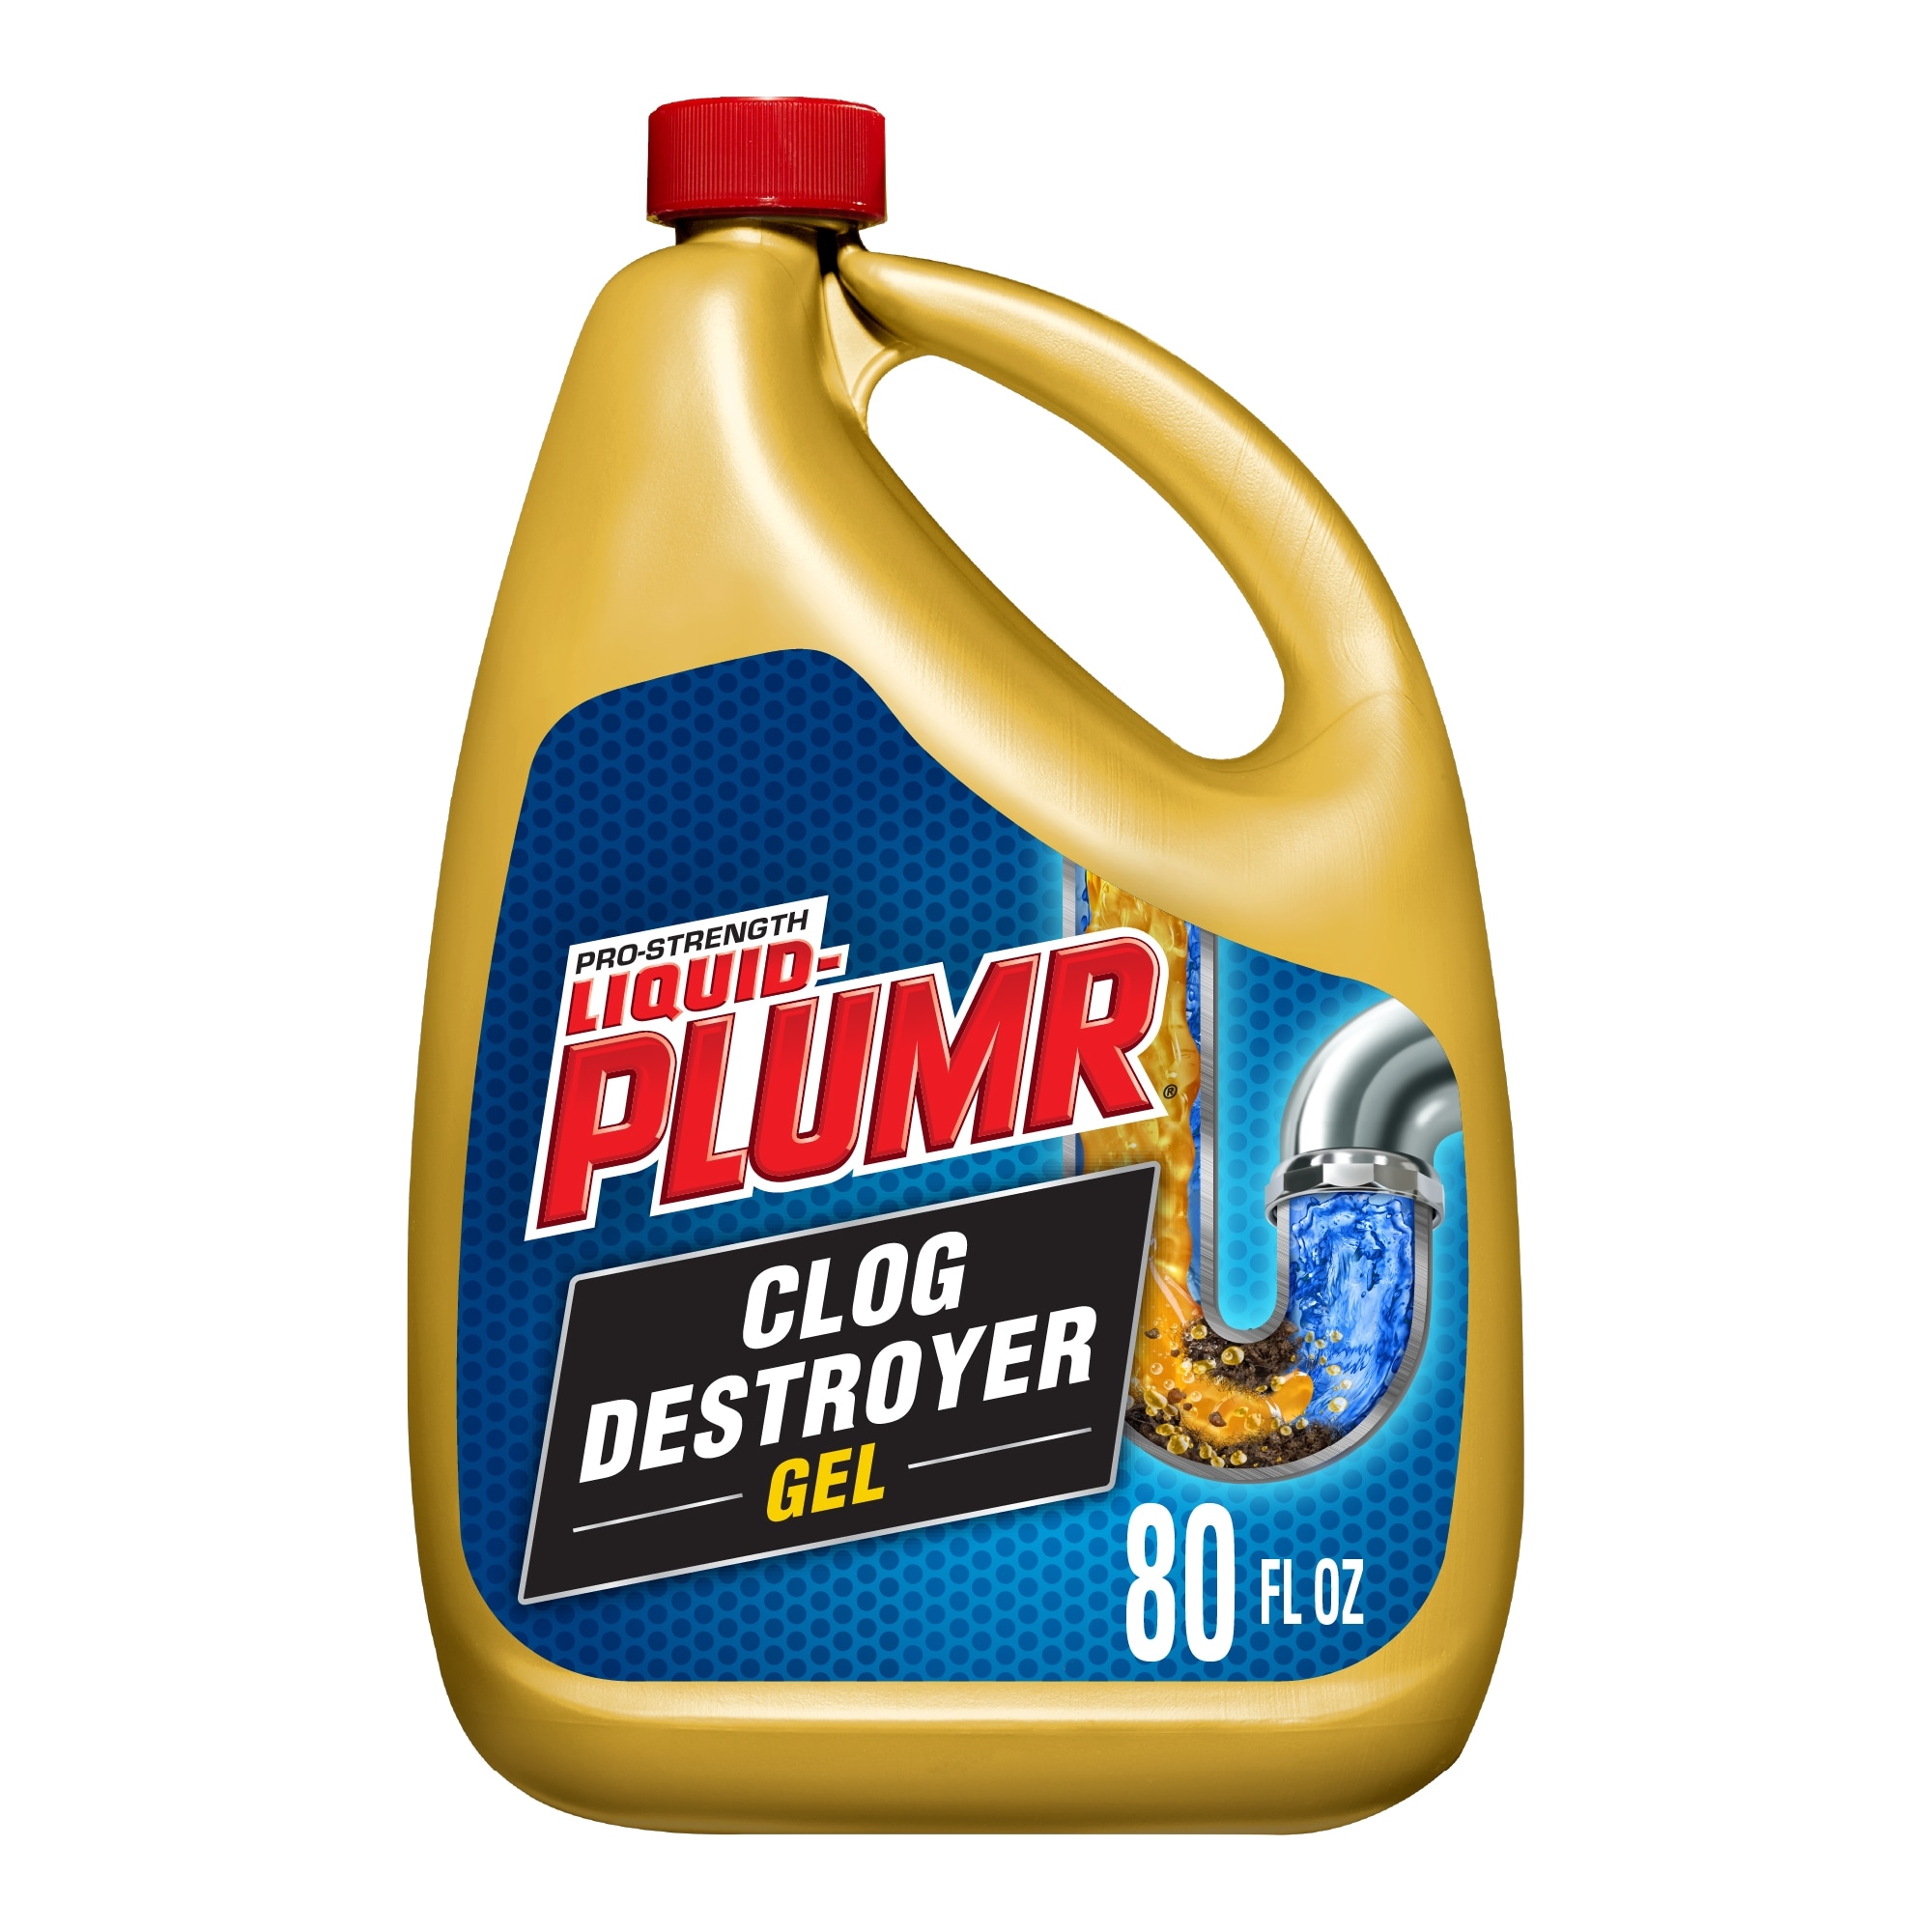 Mini Plunger Pump Liquid Plumr Clog Remover Cleaner Unclogger Tool